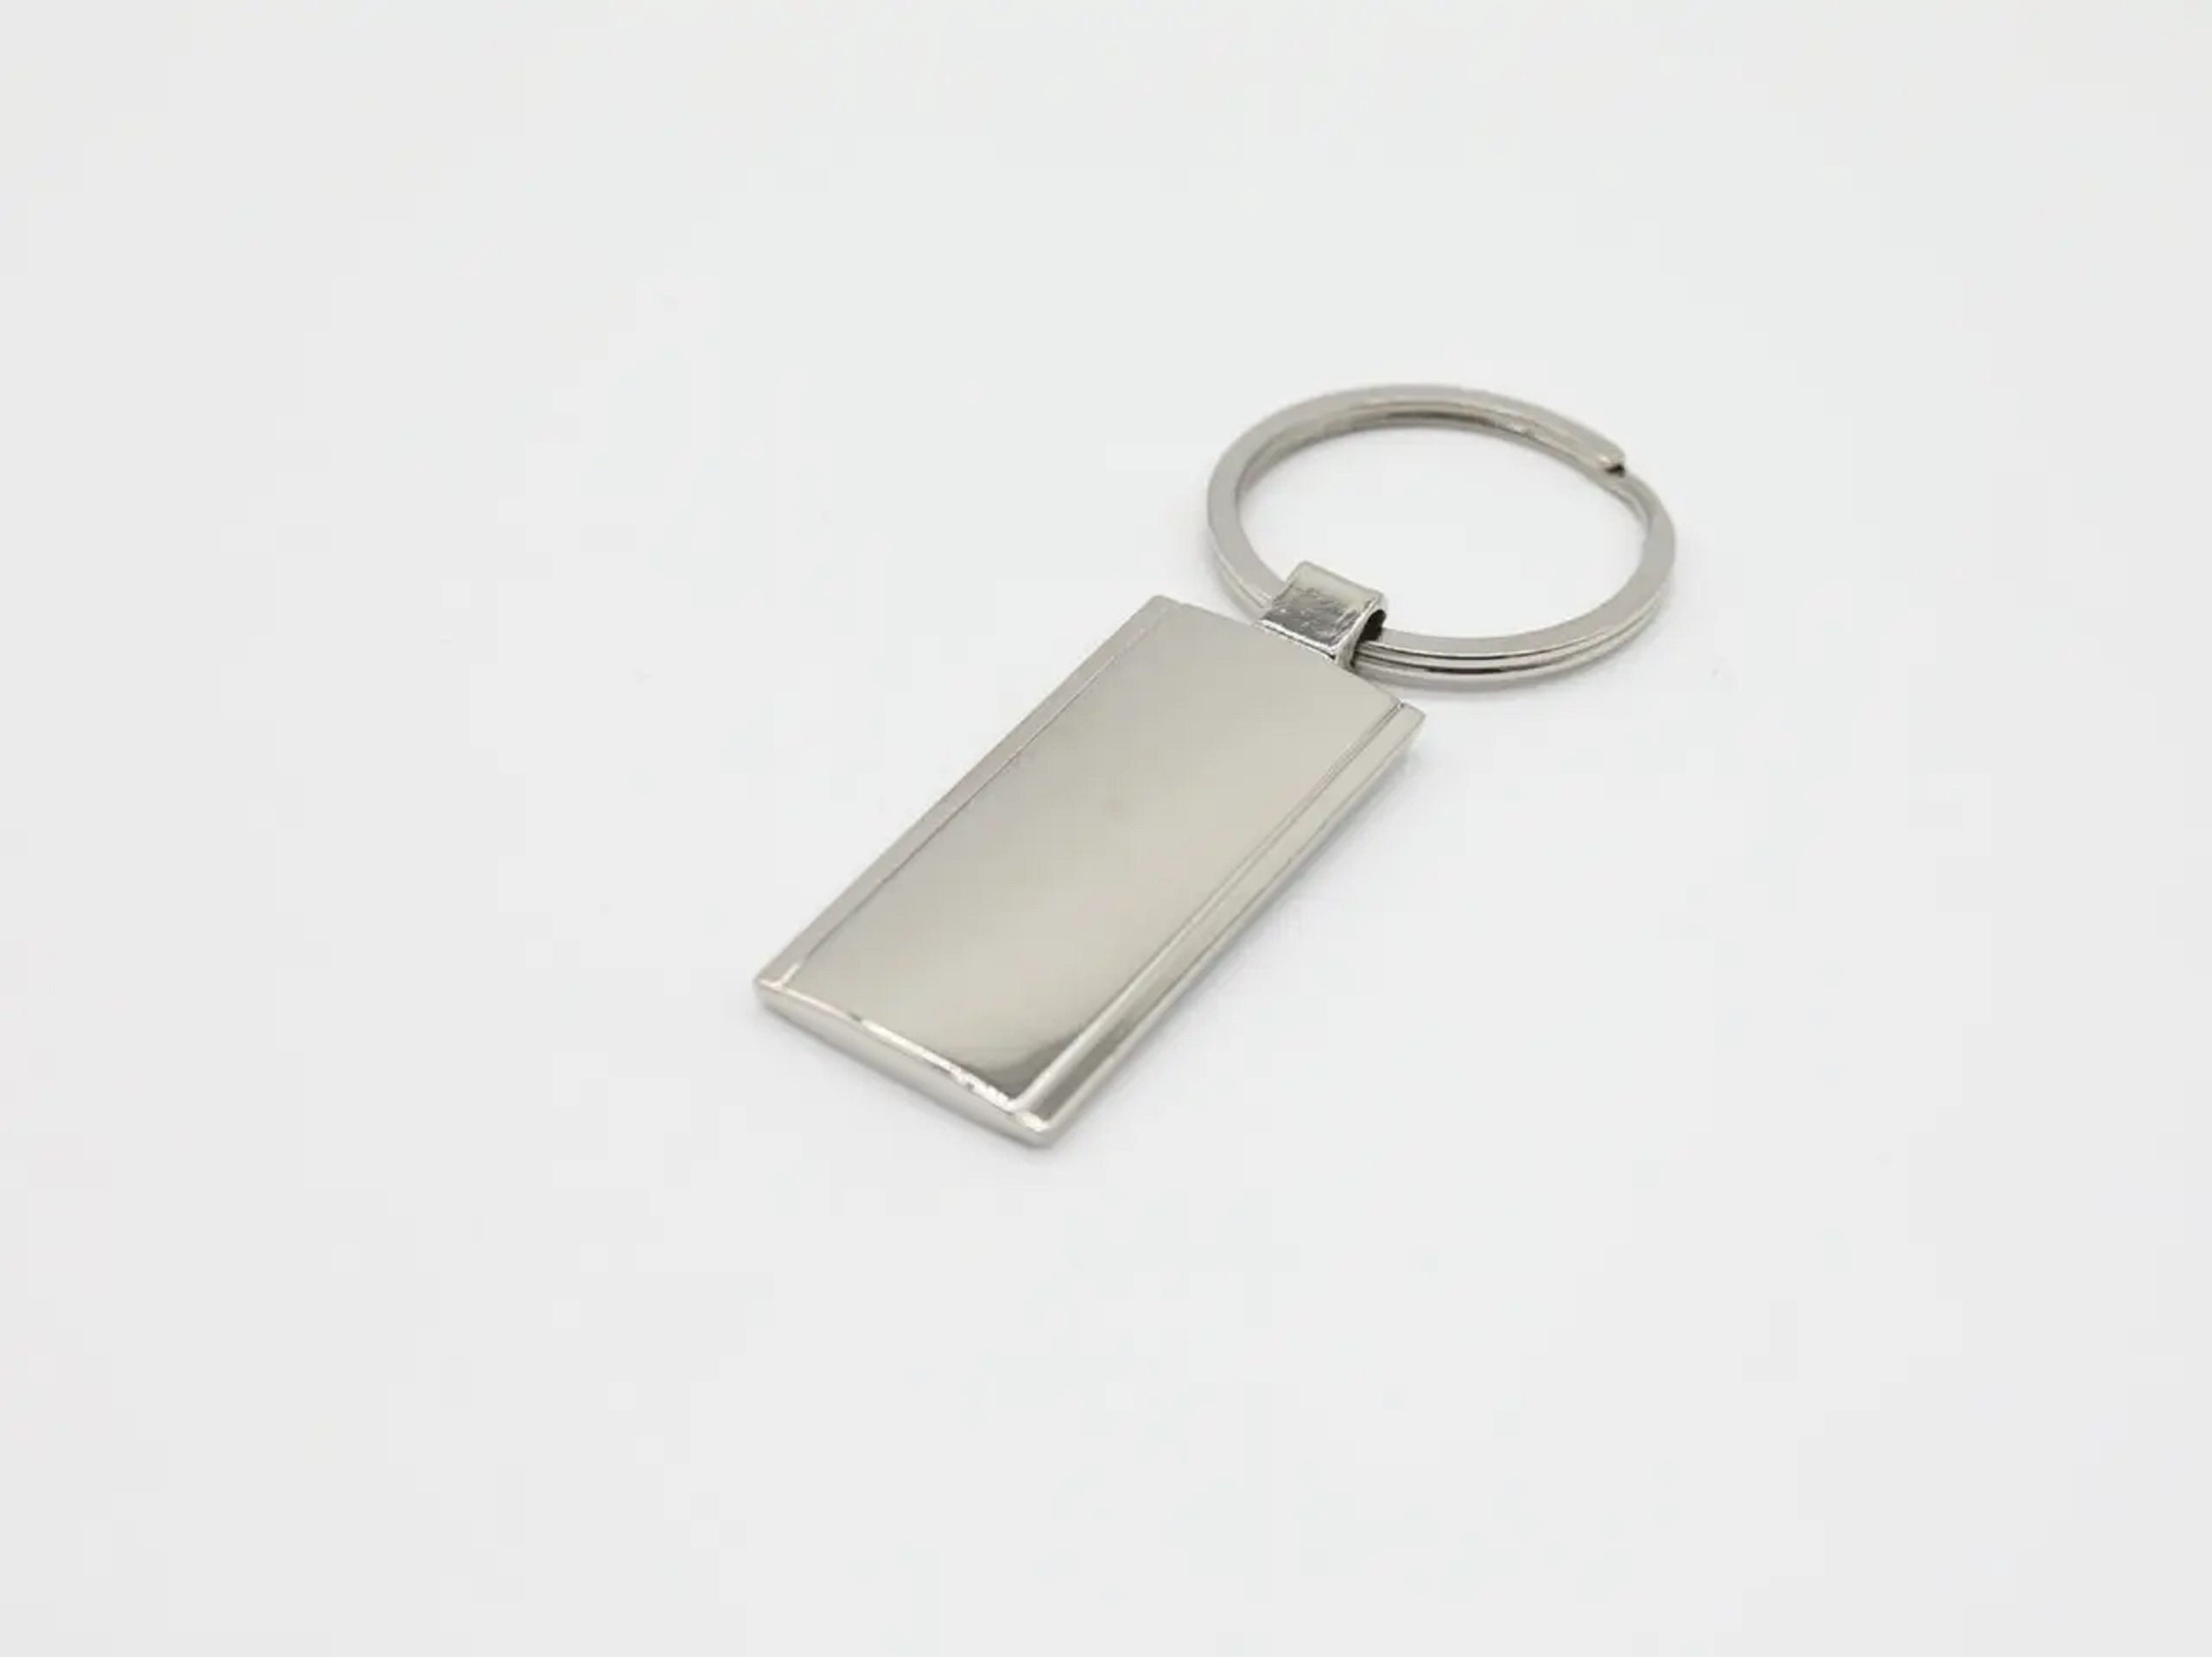 FittingsStudio Versatile Metal Circle Keychain Blanks - Crafting Custom Logo Keychains, Blank Keychains, Metal Keychains with Key Holder for Hotels, Motels